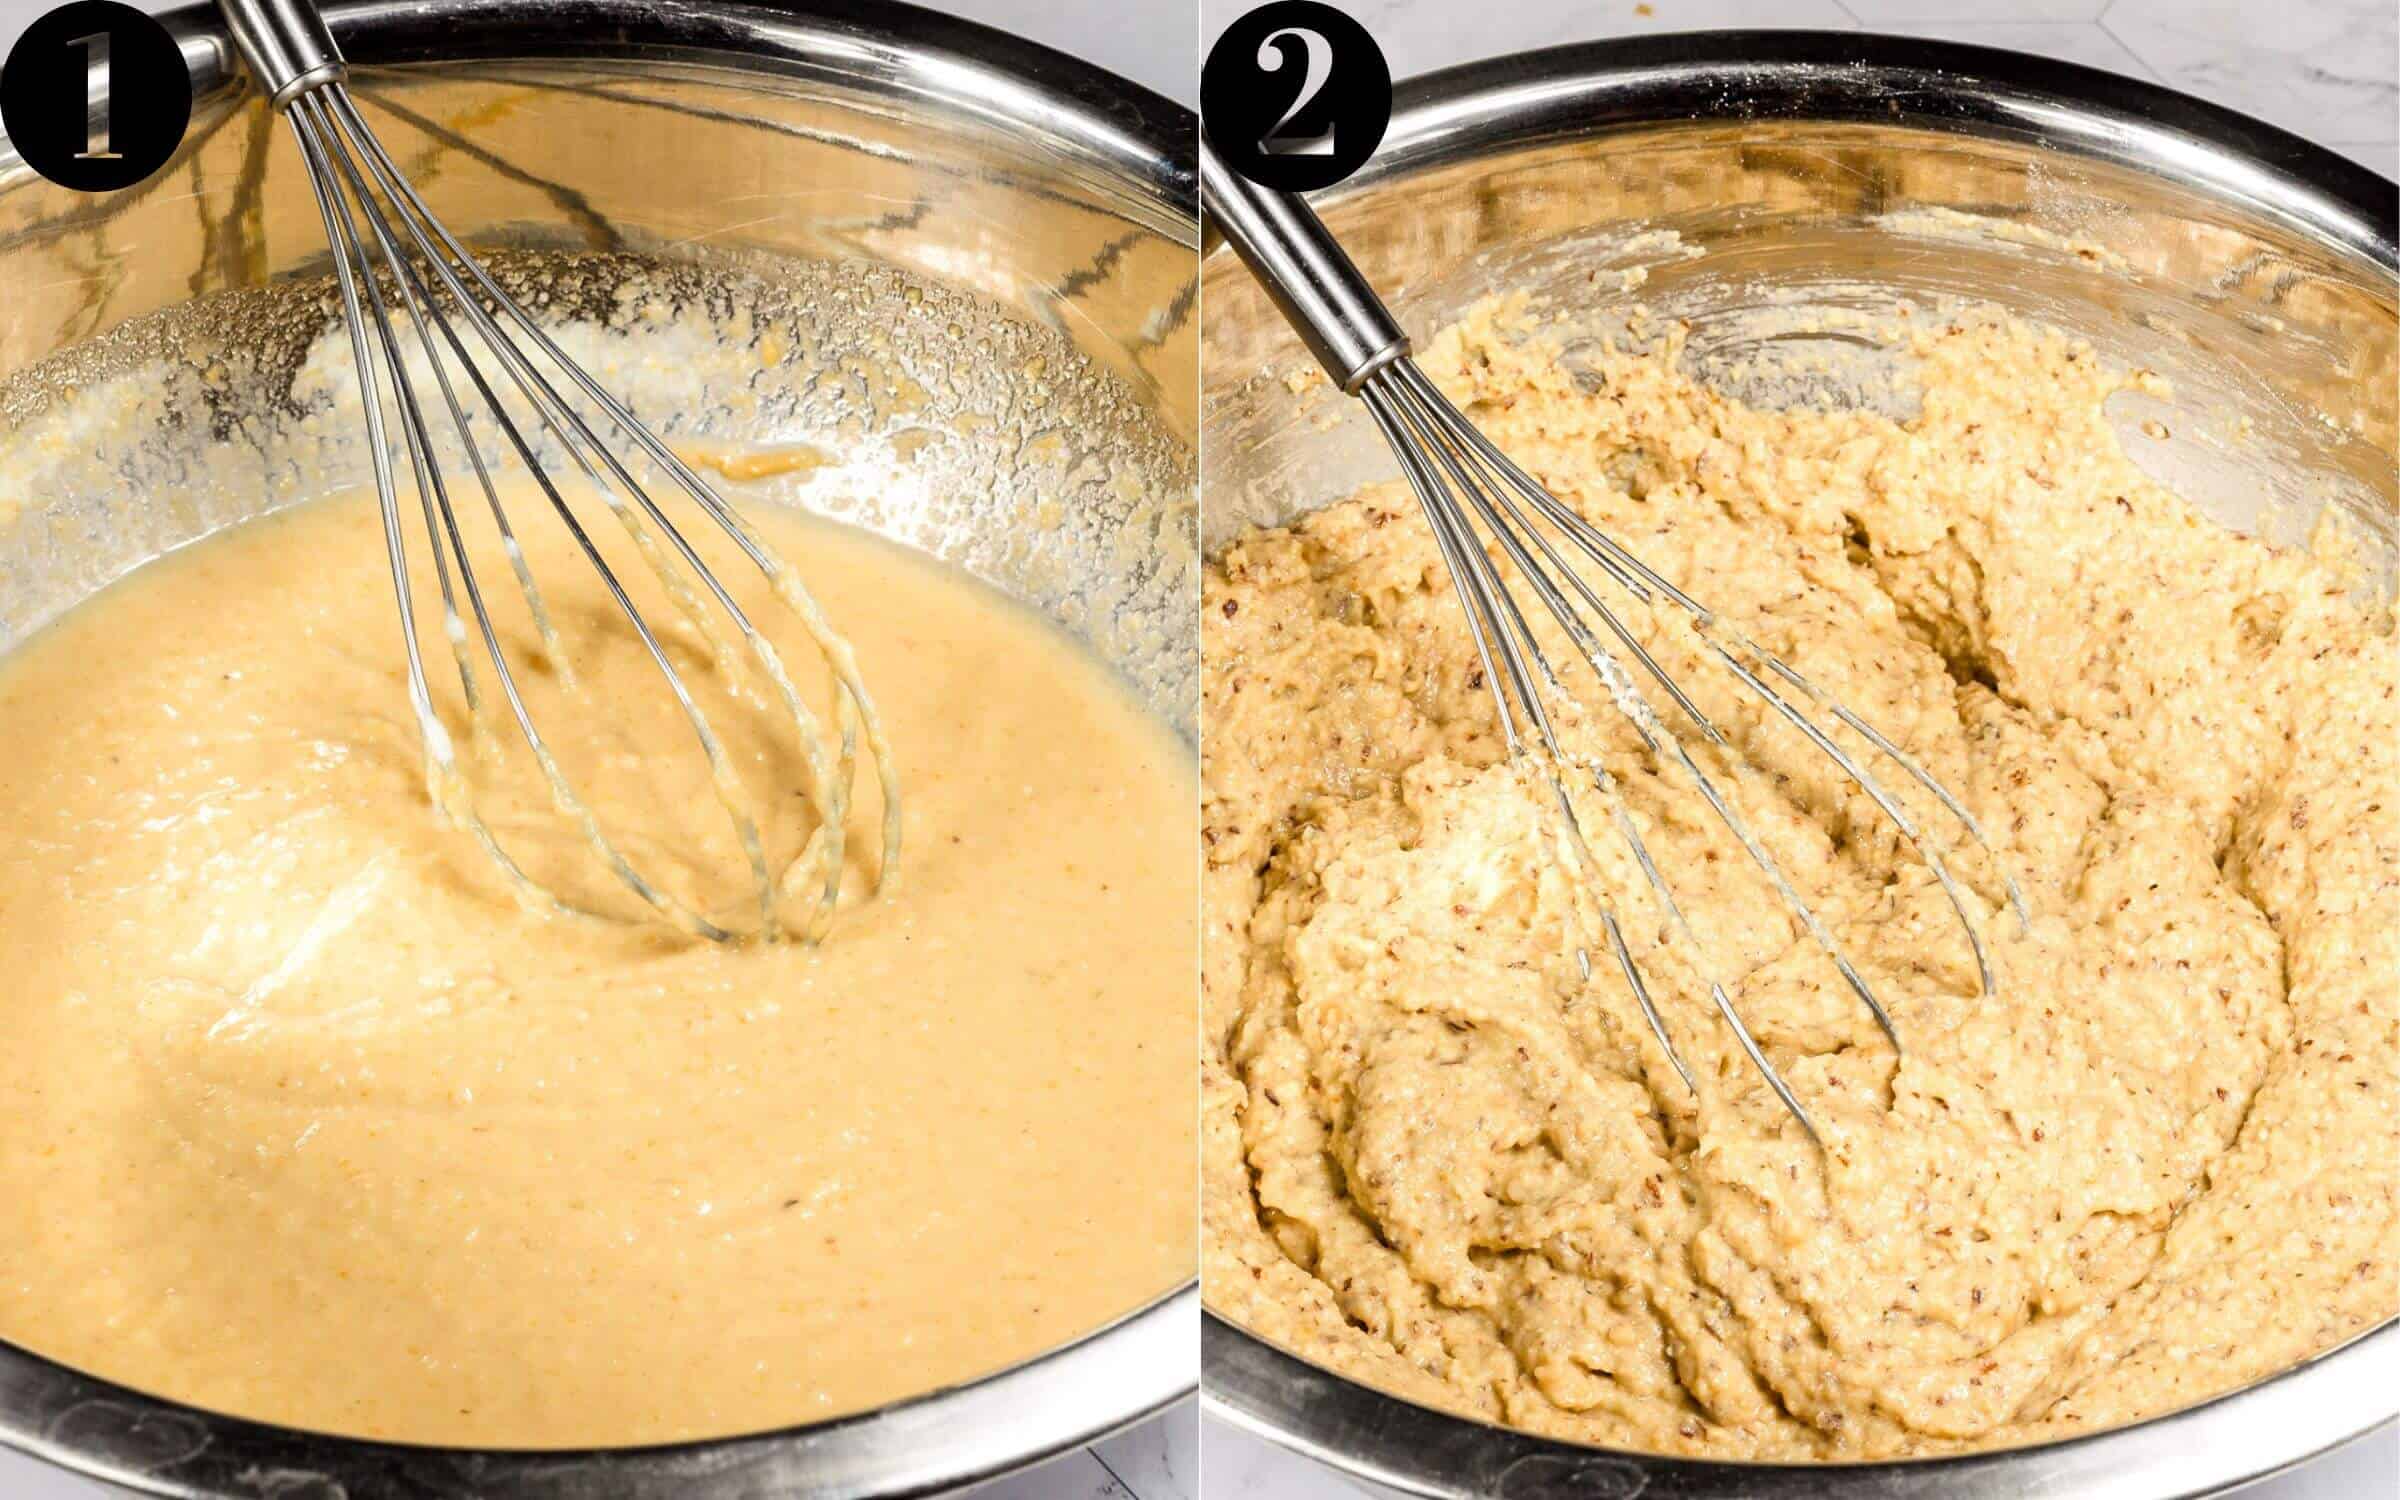 Peanut Butter cake process shots. Image 1: combined wet ingredients. Image 2: Cake batter.